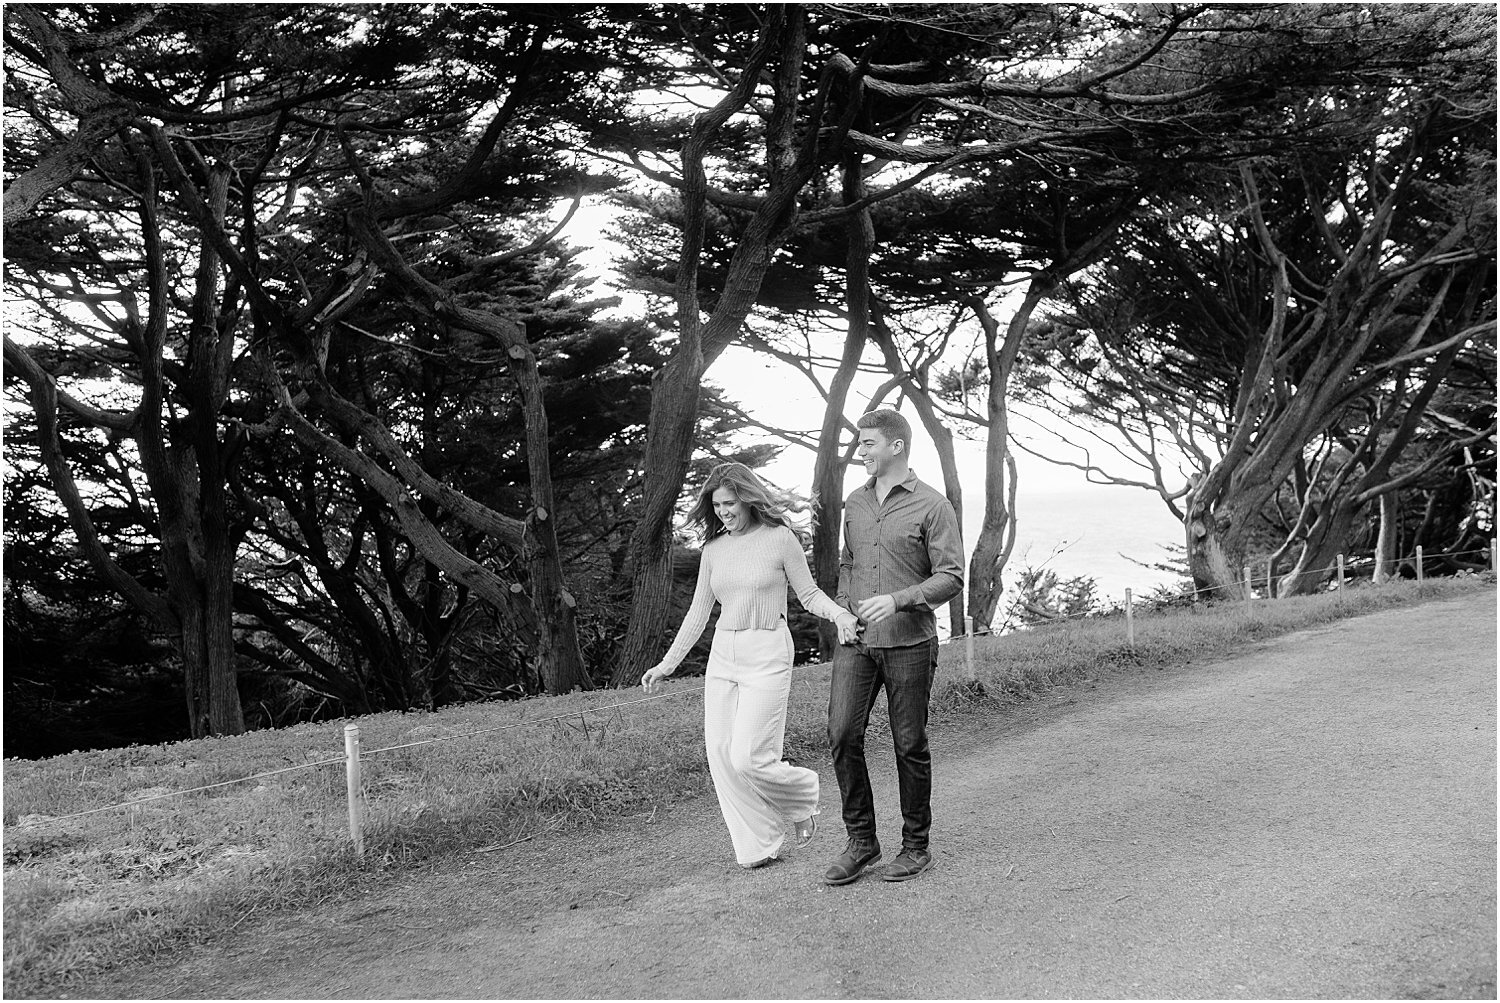 1985lukephotography.com | 1985 Luke Photography Bay Area San Francisco Northern California Wedding Photographers | Sutro Baths Engagement Session | Lands End Engagements 25.jpg